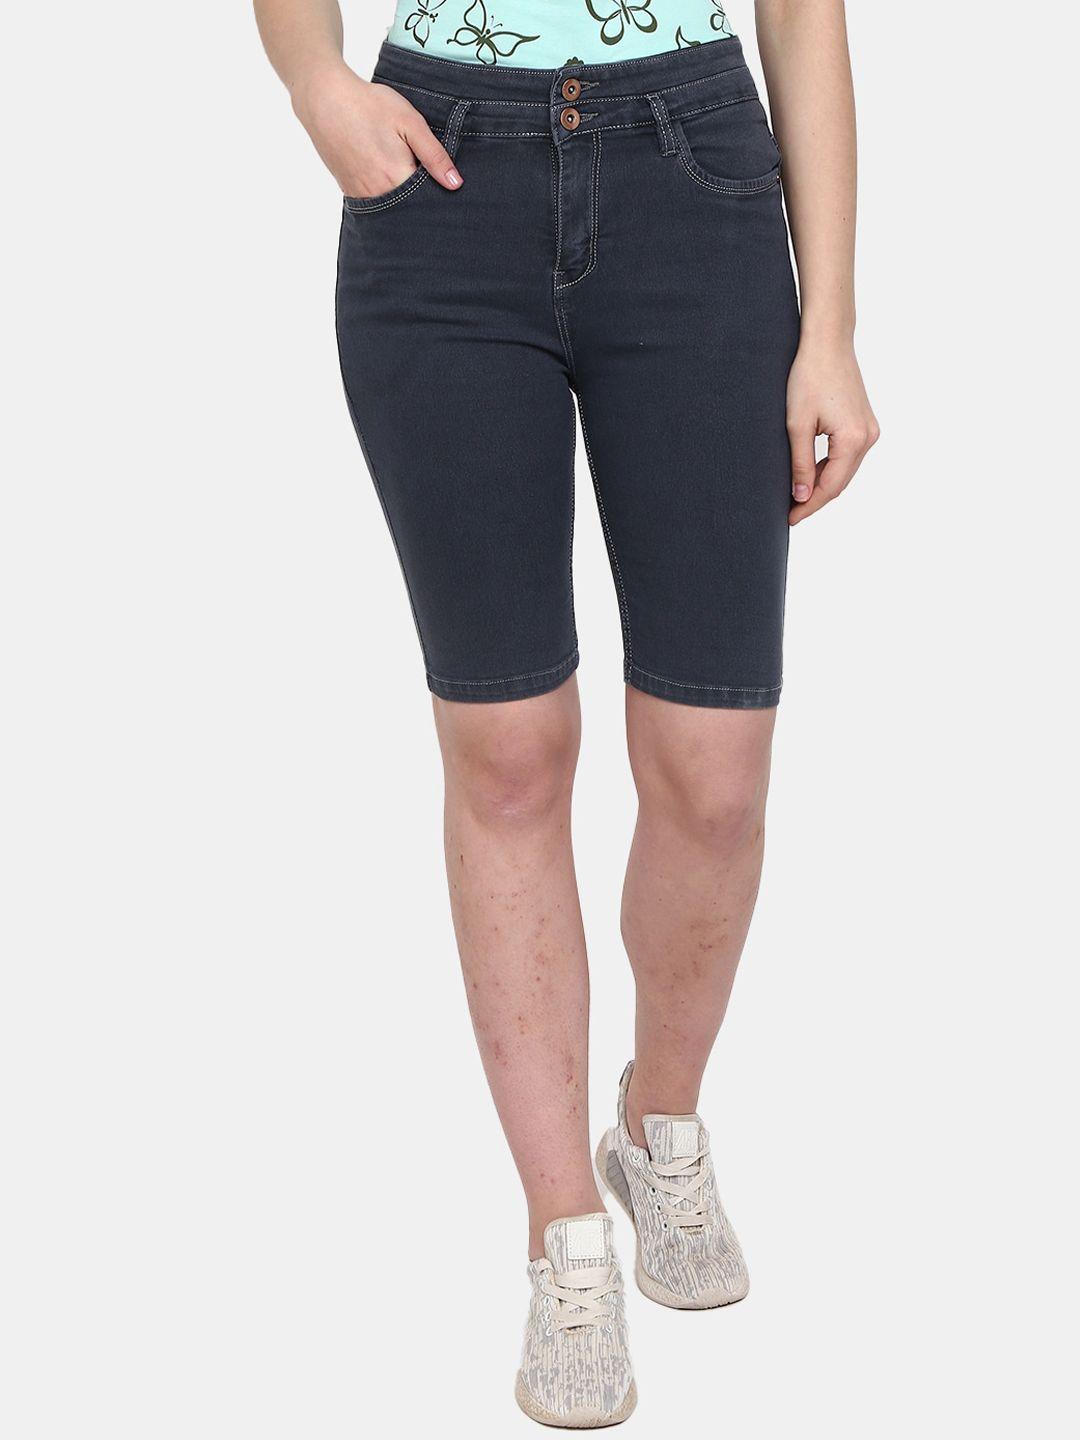 v-mart women cotton outdoor denim shorts